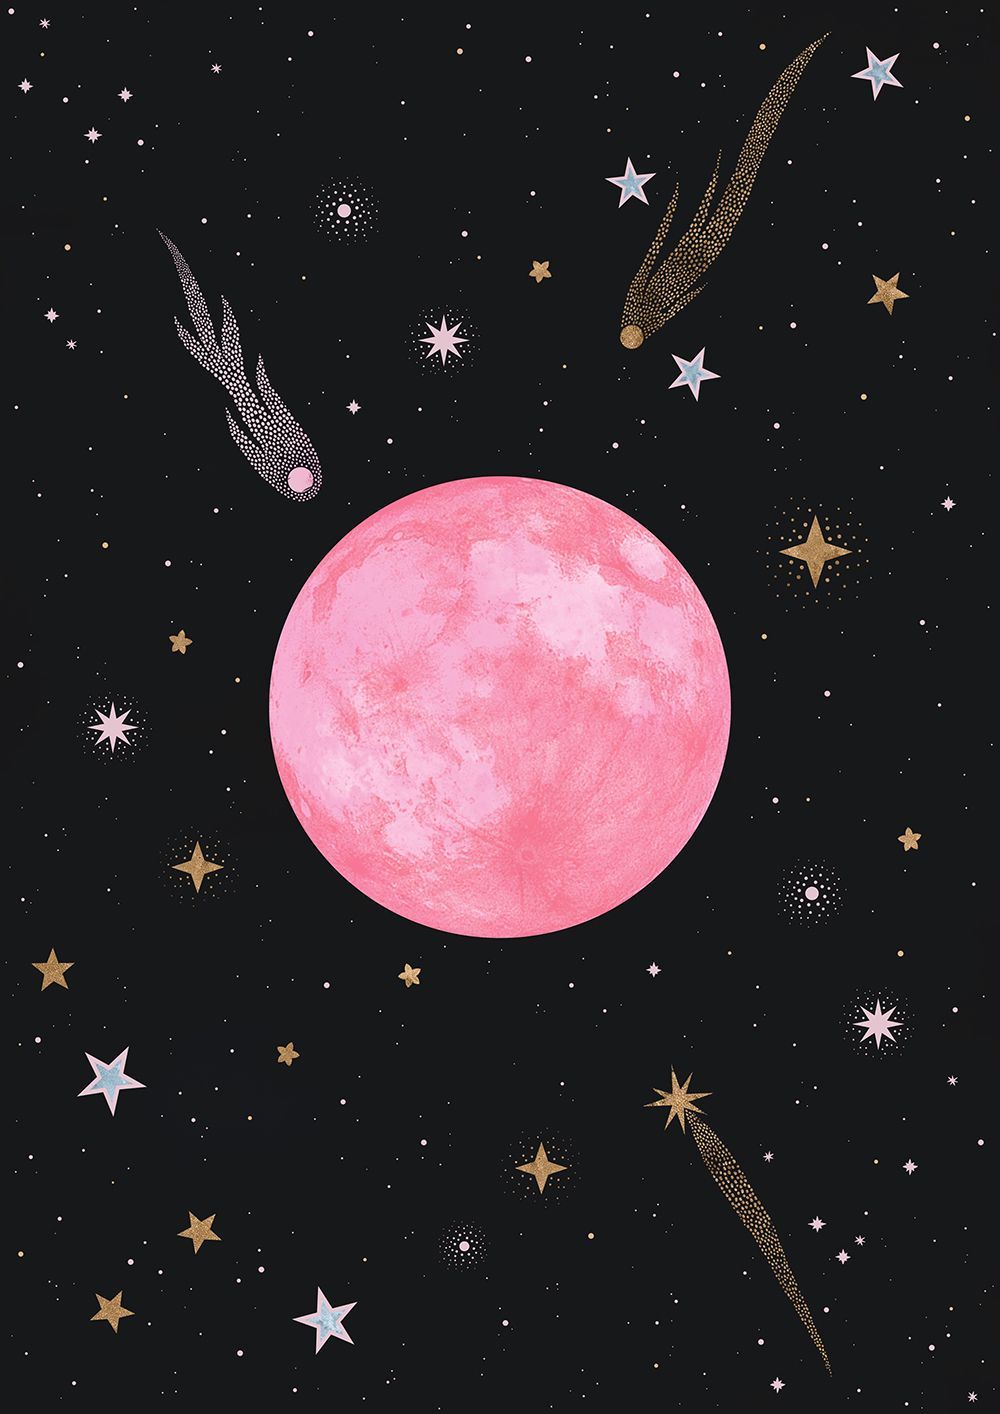 Top Gambar aesthetic background pinterest moon Terbaik | Sobatbackground